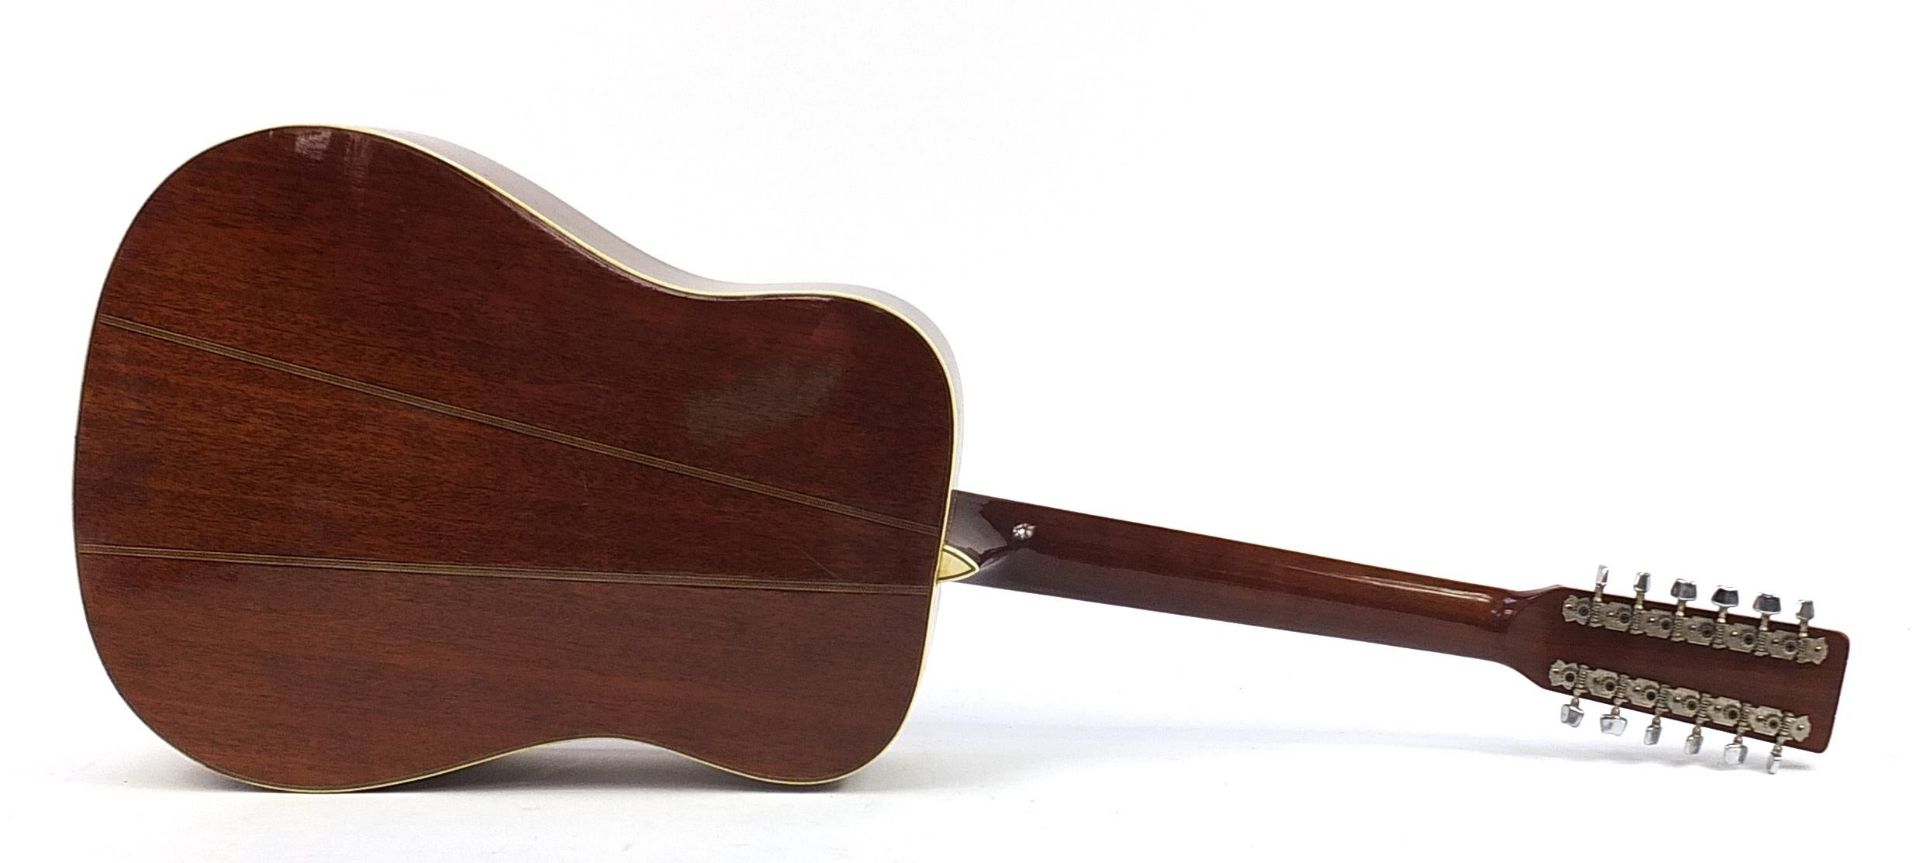 Hohner Leyanda twelve string acoustic guitar, model number LW1200N - Image 2 of 4